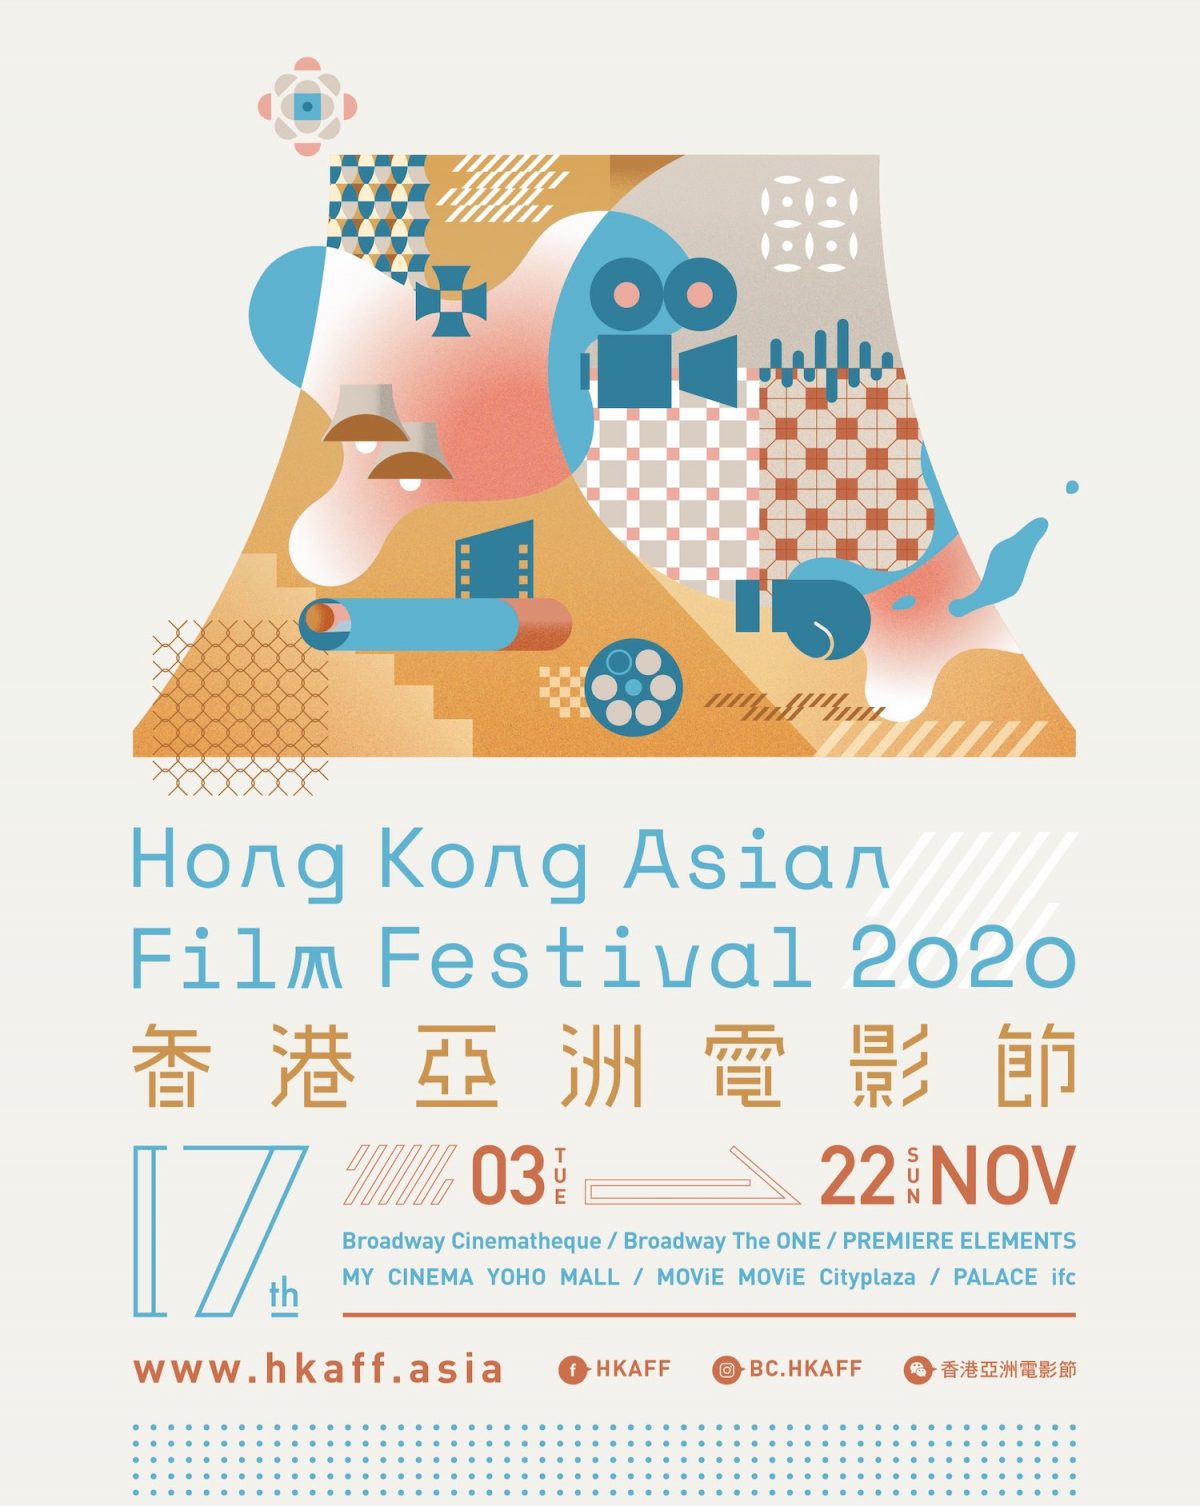 Hong Kong Asian Film Festival